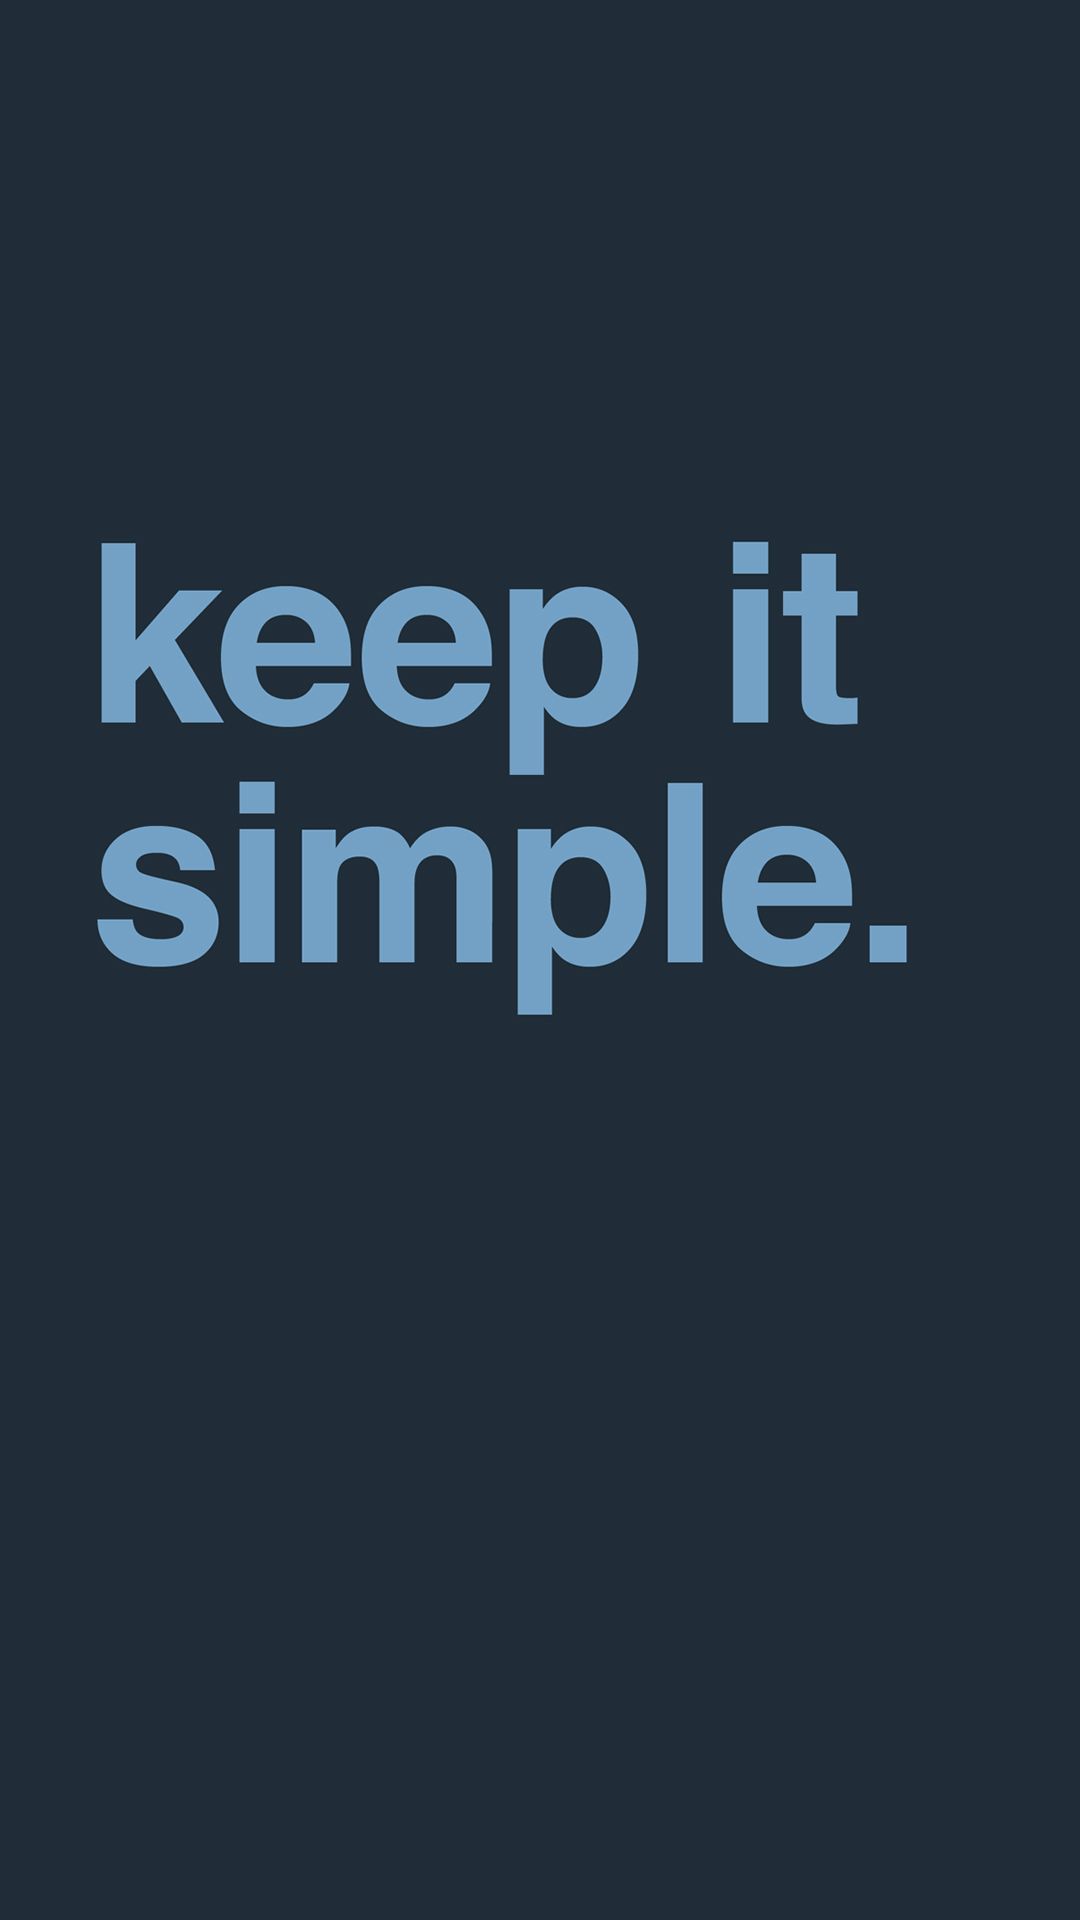 Keep It Simple iPhone Wallpaper HD